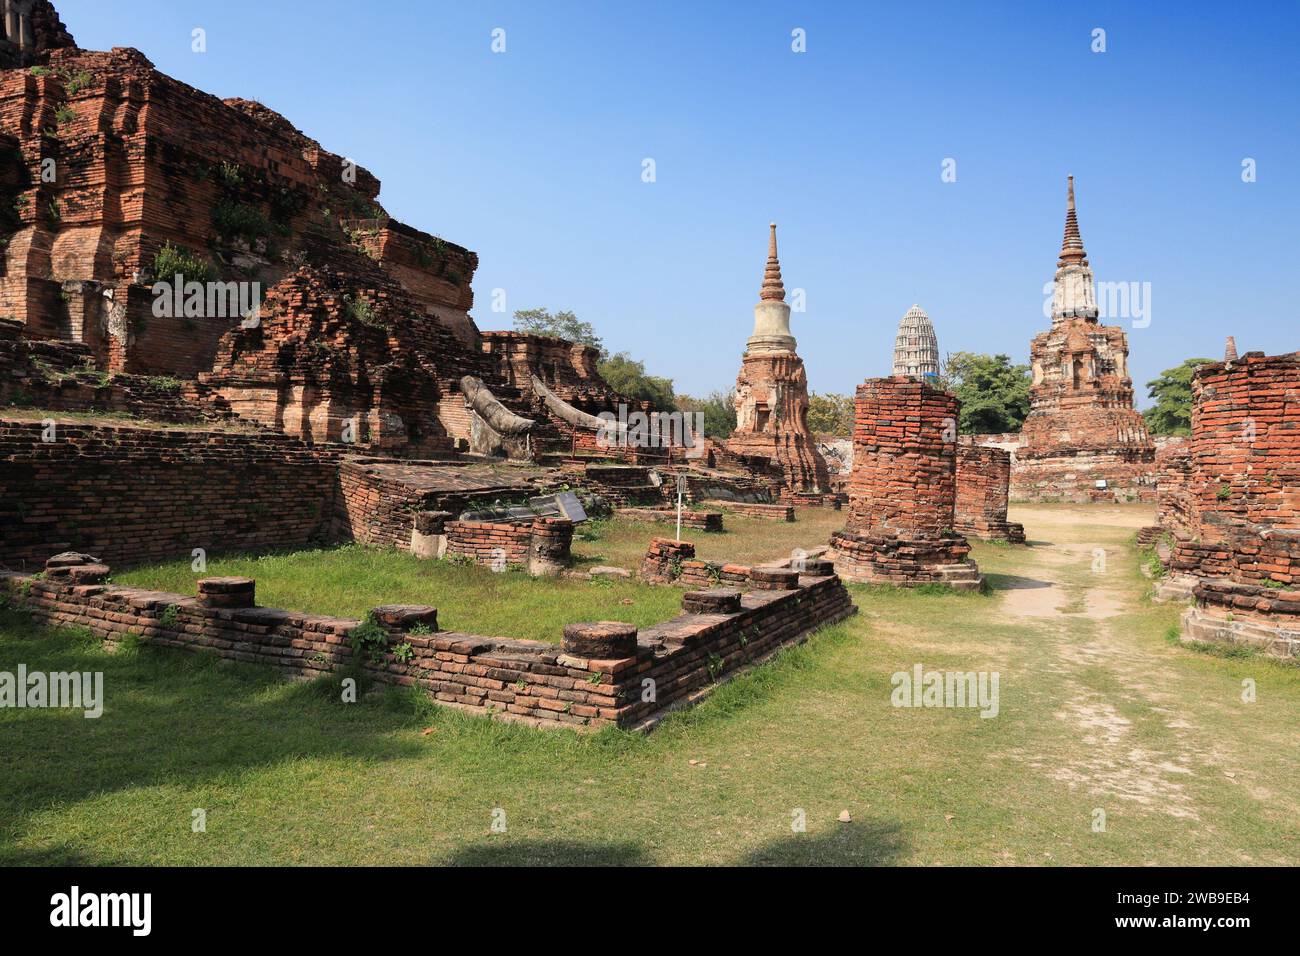 Landmark in Thailand. Ayutthaya - UNESCO World Heritage Site near Bangkok. Buddhist temple complex. Stock Photo